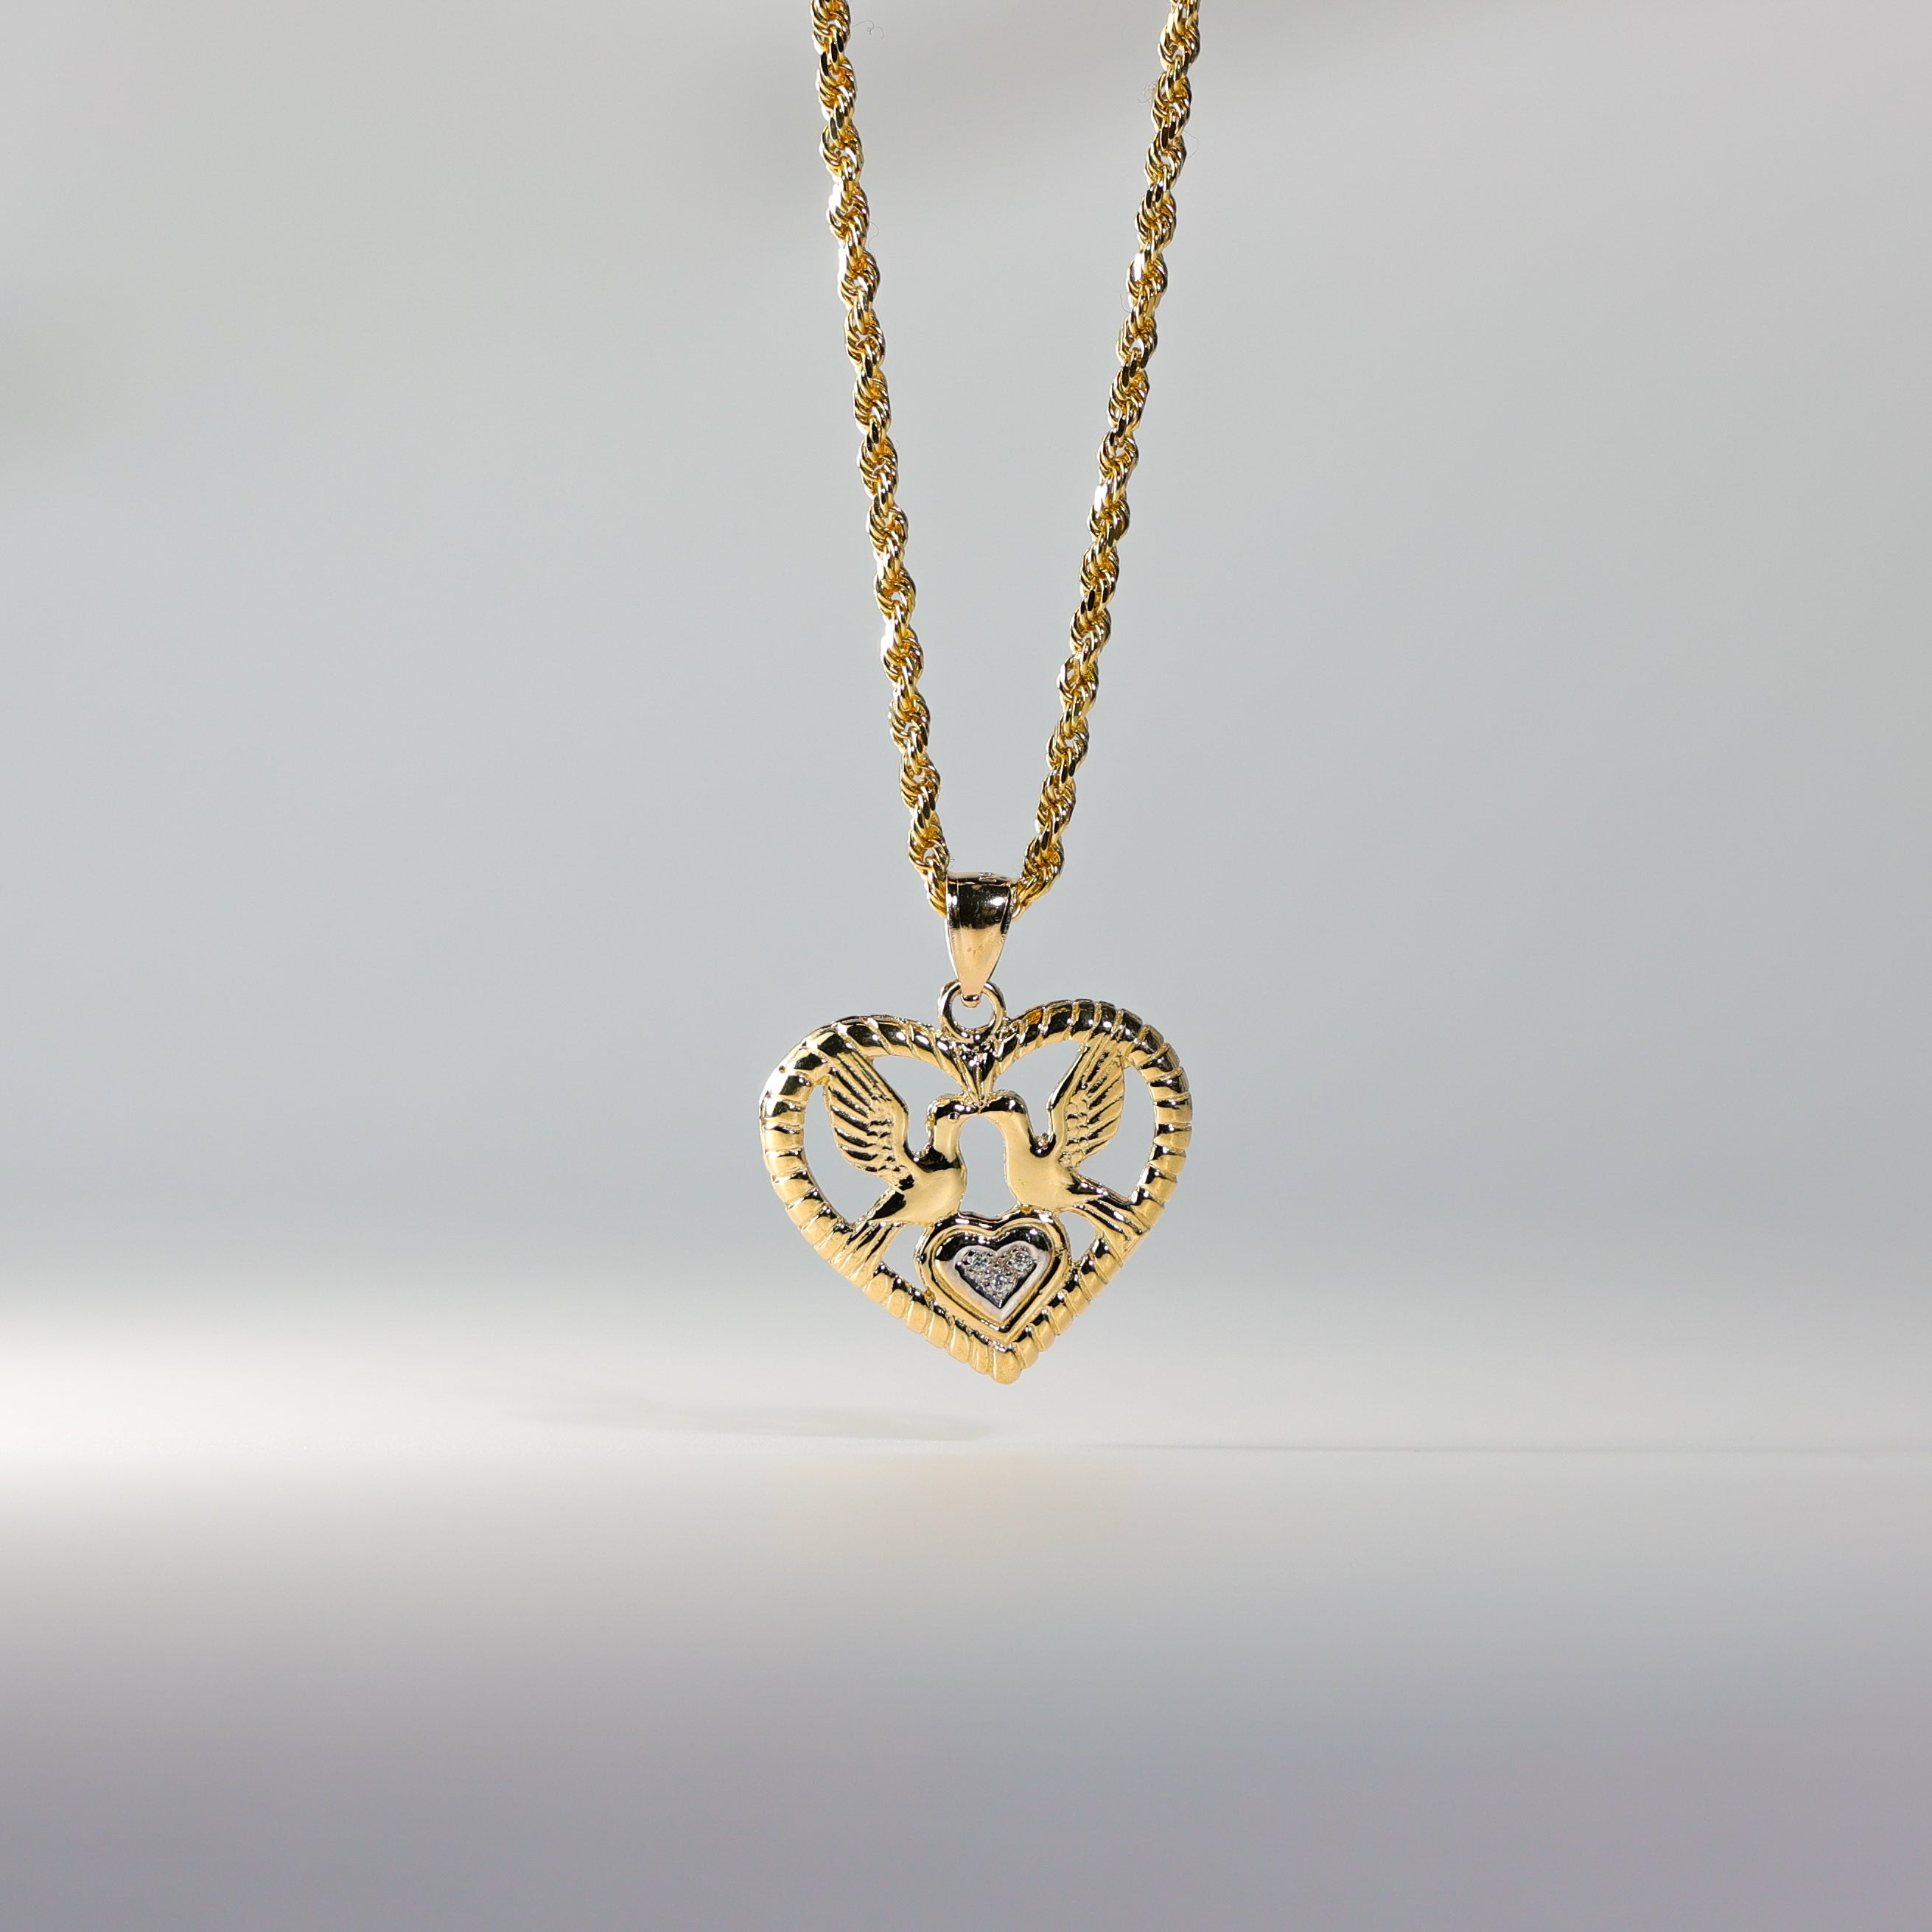 Gold Holy Spirit Dove Pendant Model-1499 - Charlie & Co. Jewelry